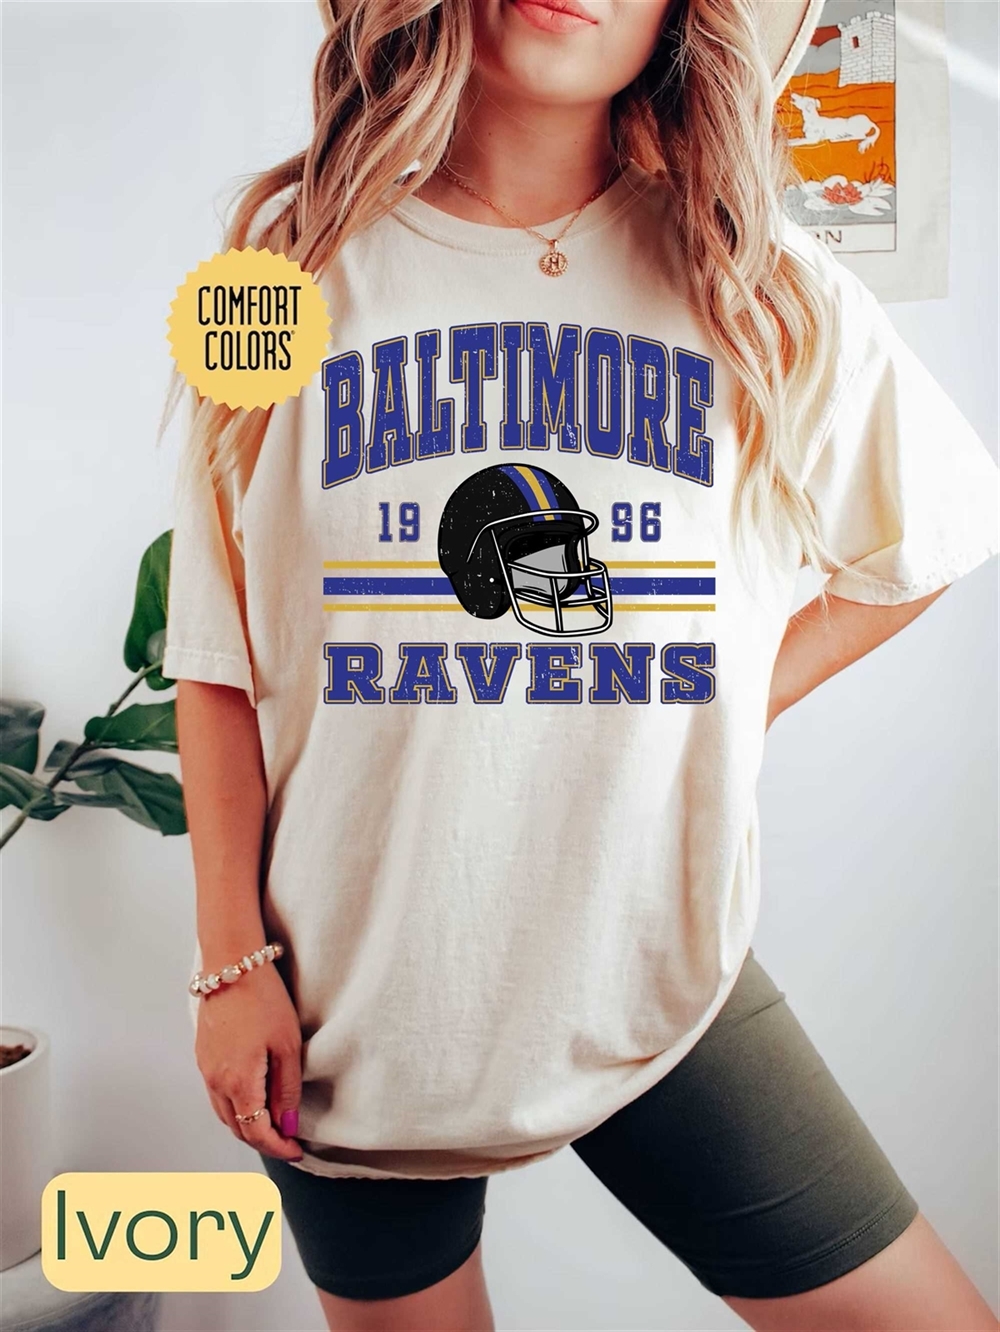 Baltimore Football Comfort Colors Shirt Trendy Vintage Retro 80s Style Football Tshirt